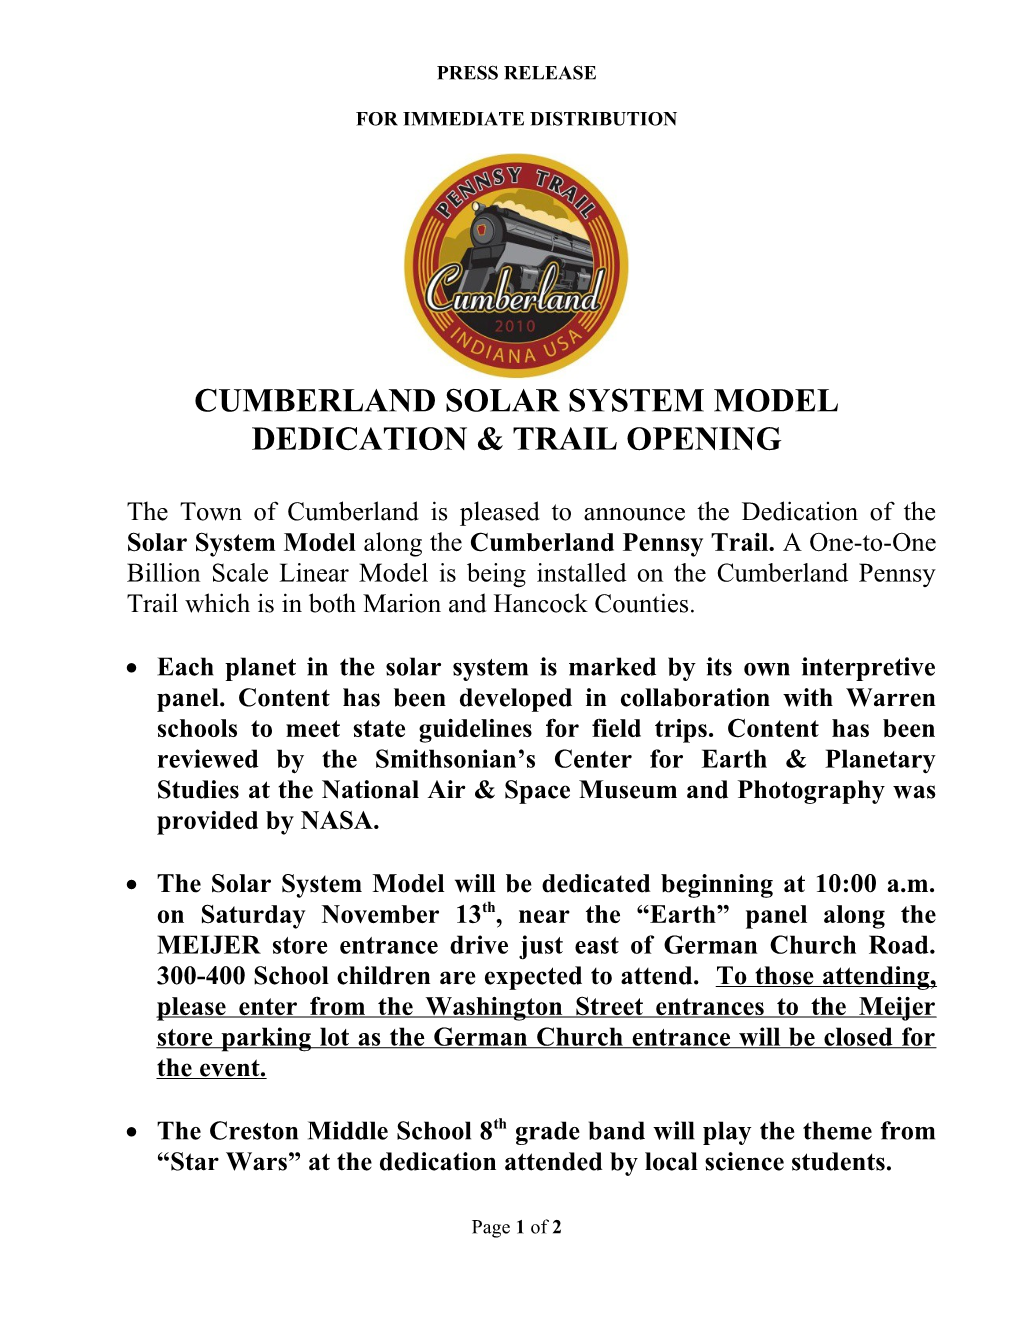 Cumberland Solar System Model Dedication & Trail Opening